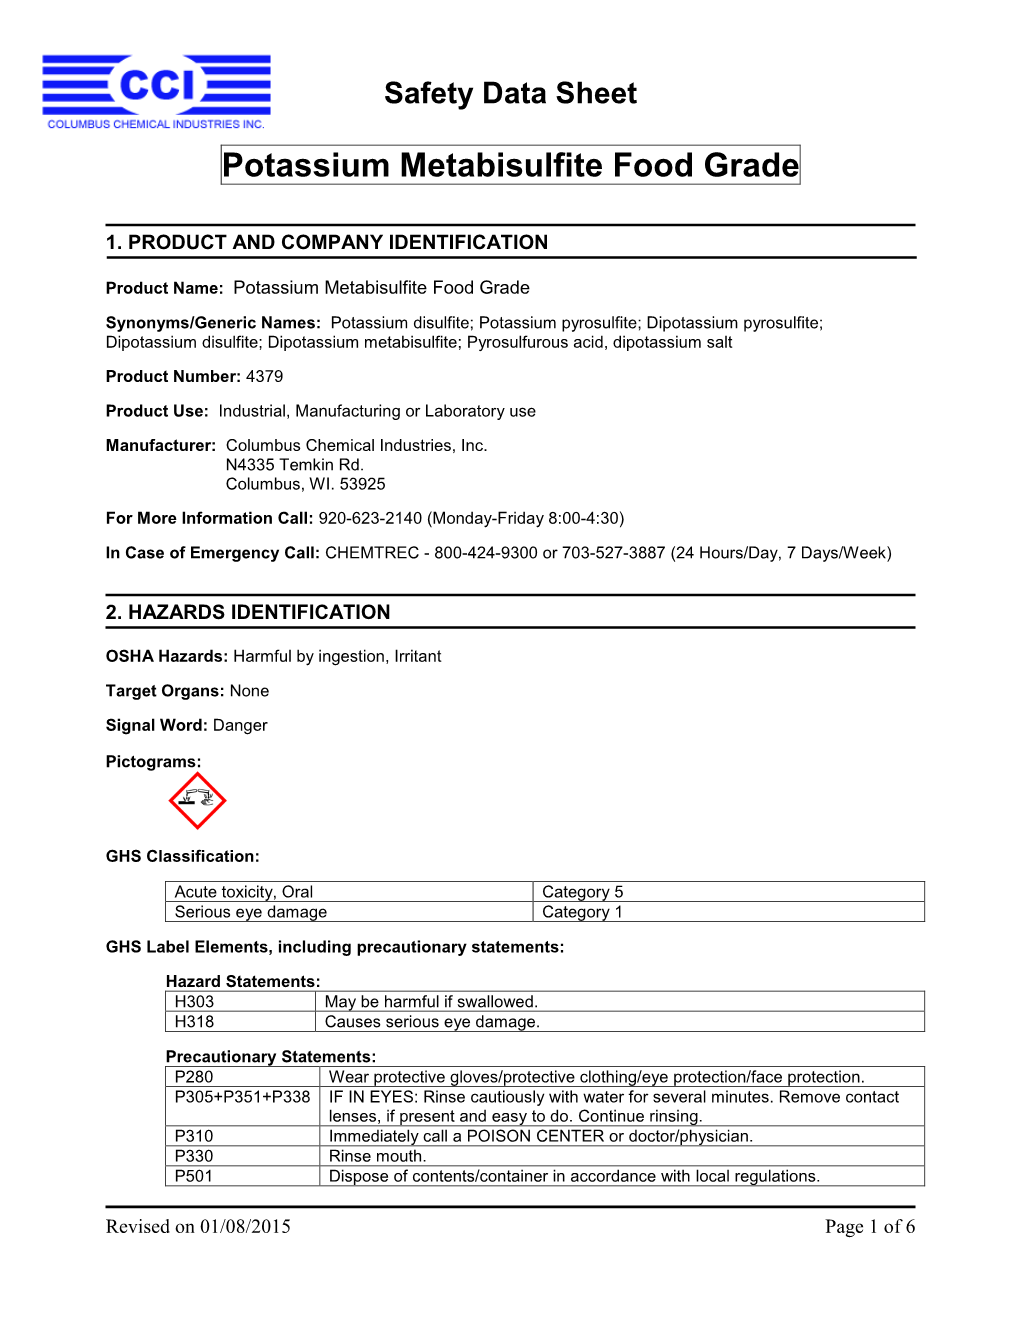 Potassium Metabisulfite Food Grade